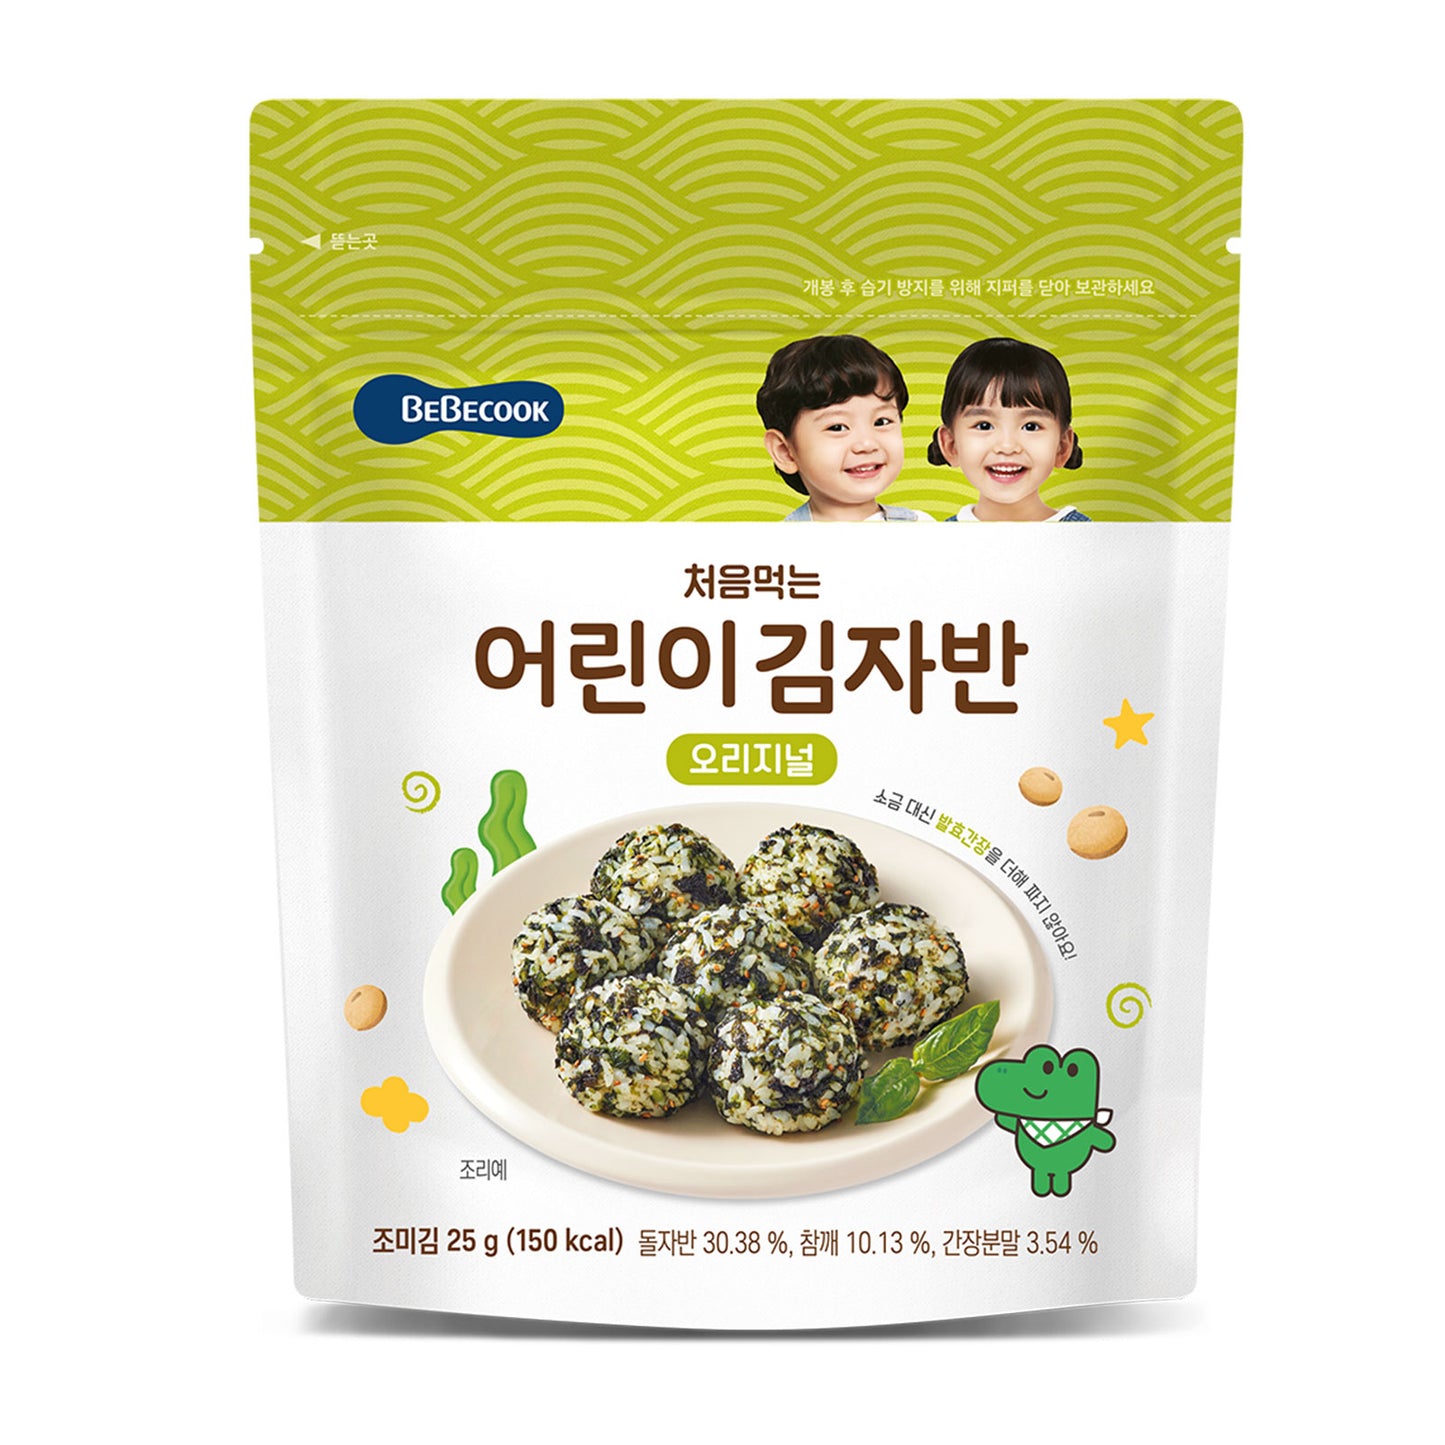 BeBecook - My First Sun-Dried Seaweed Mix (Original) 25g